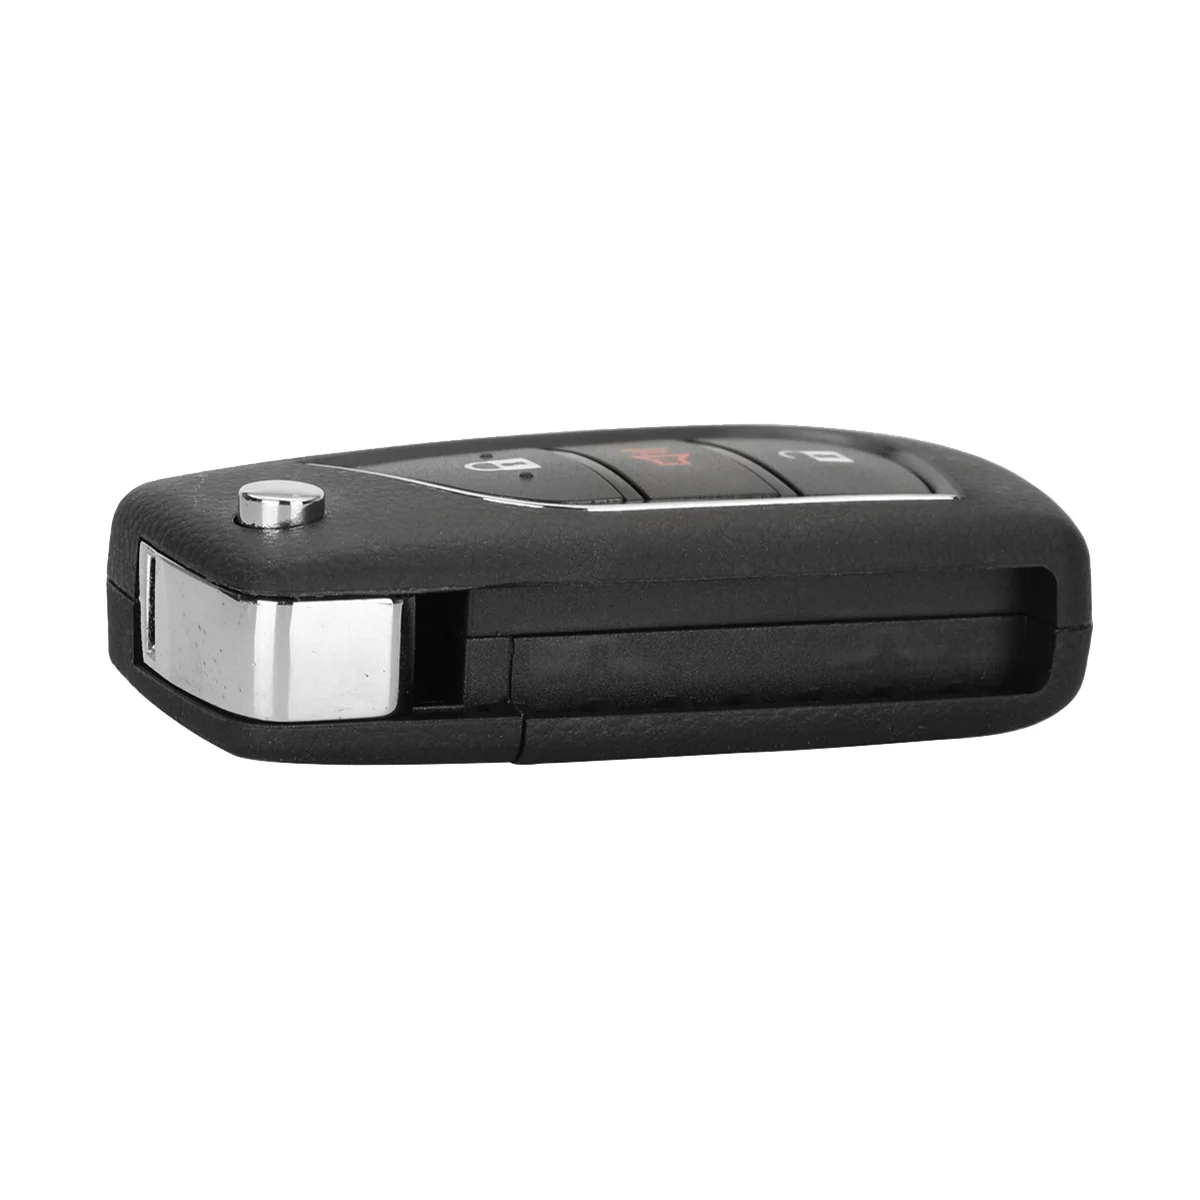 

KEYDIY B13-2+1 KD Remote Control Car Key Universal 3 Button for Toyota Style for KD900/KD-X2 KD MINI/ URG200 Programmer